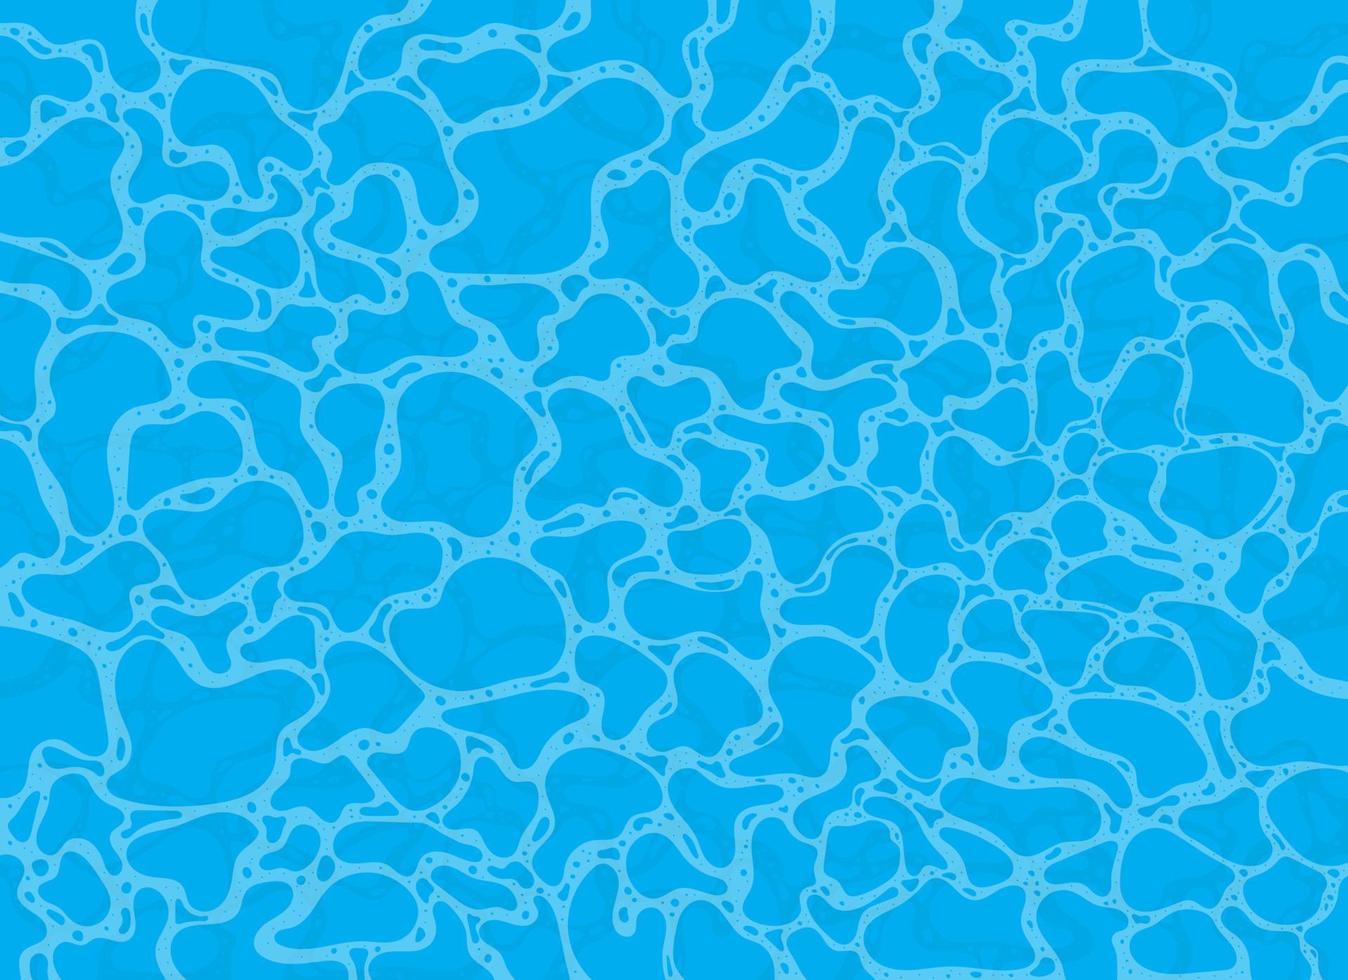 Water texture background vector design illustration